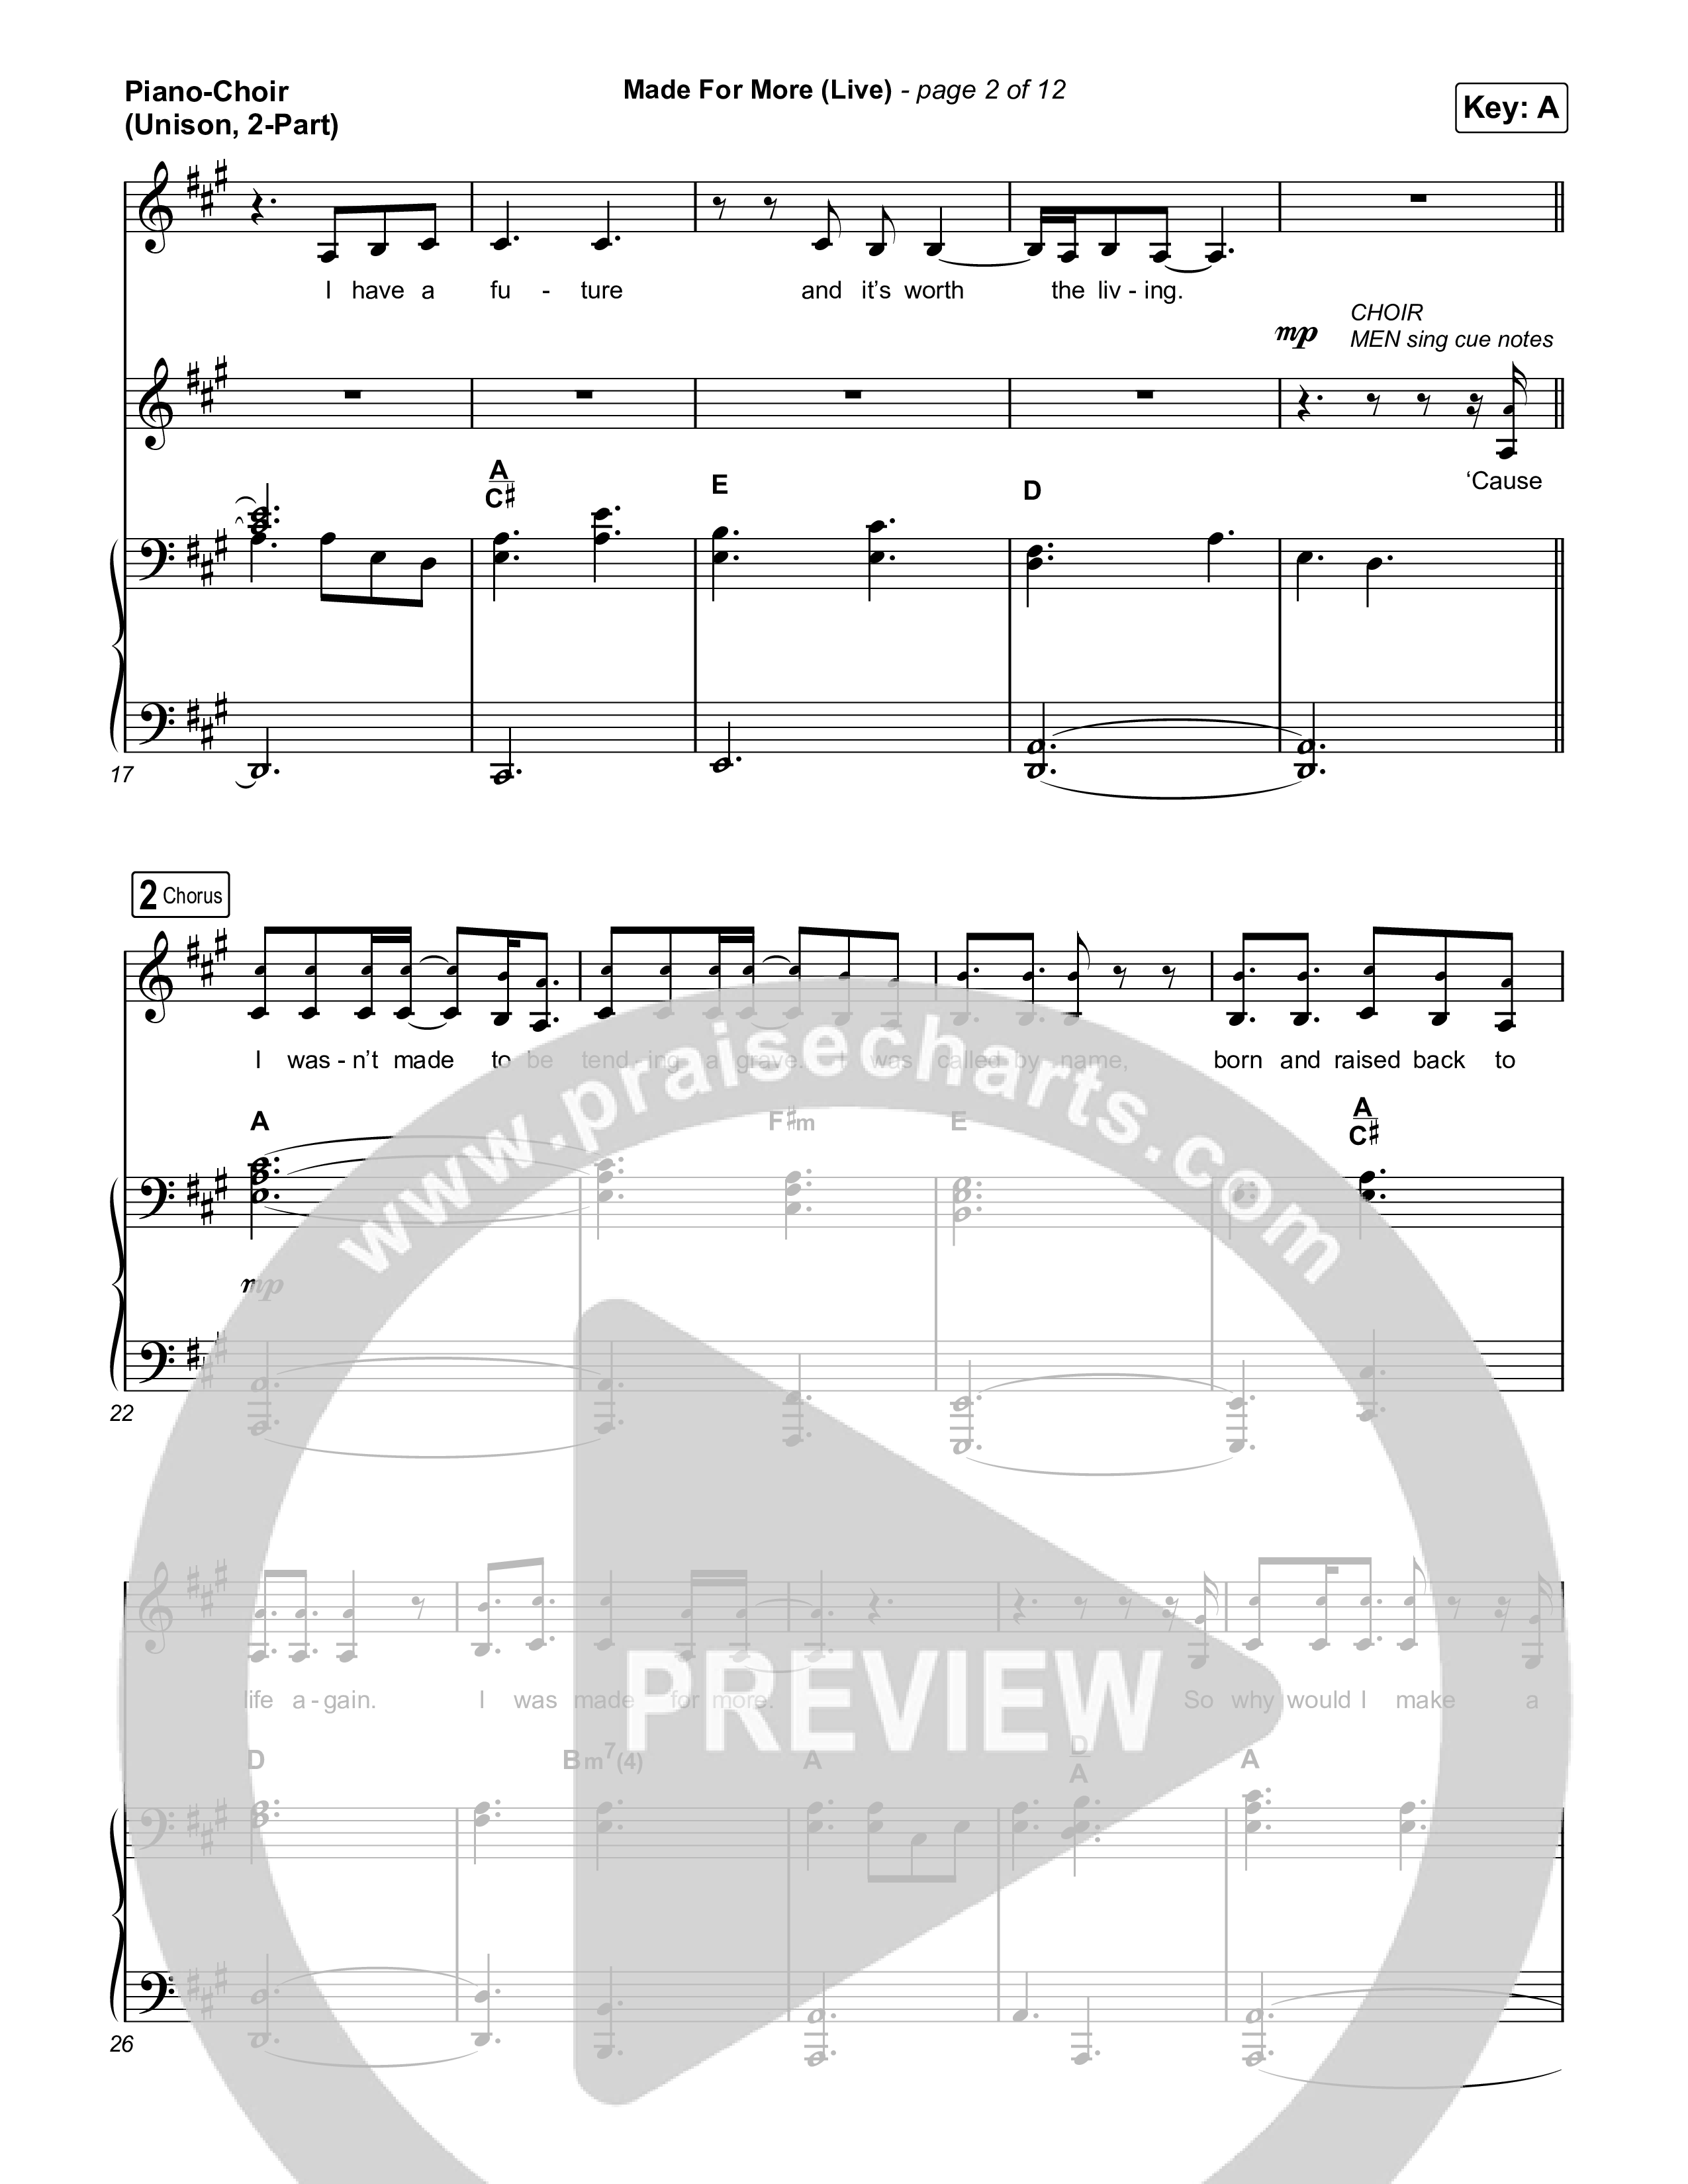 Made For More (Unison/2-Part) Piano/Choir  (Uni/2-Part) (Josh Baldwin / Jenn Johnson / Arr. Luke Gambill)